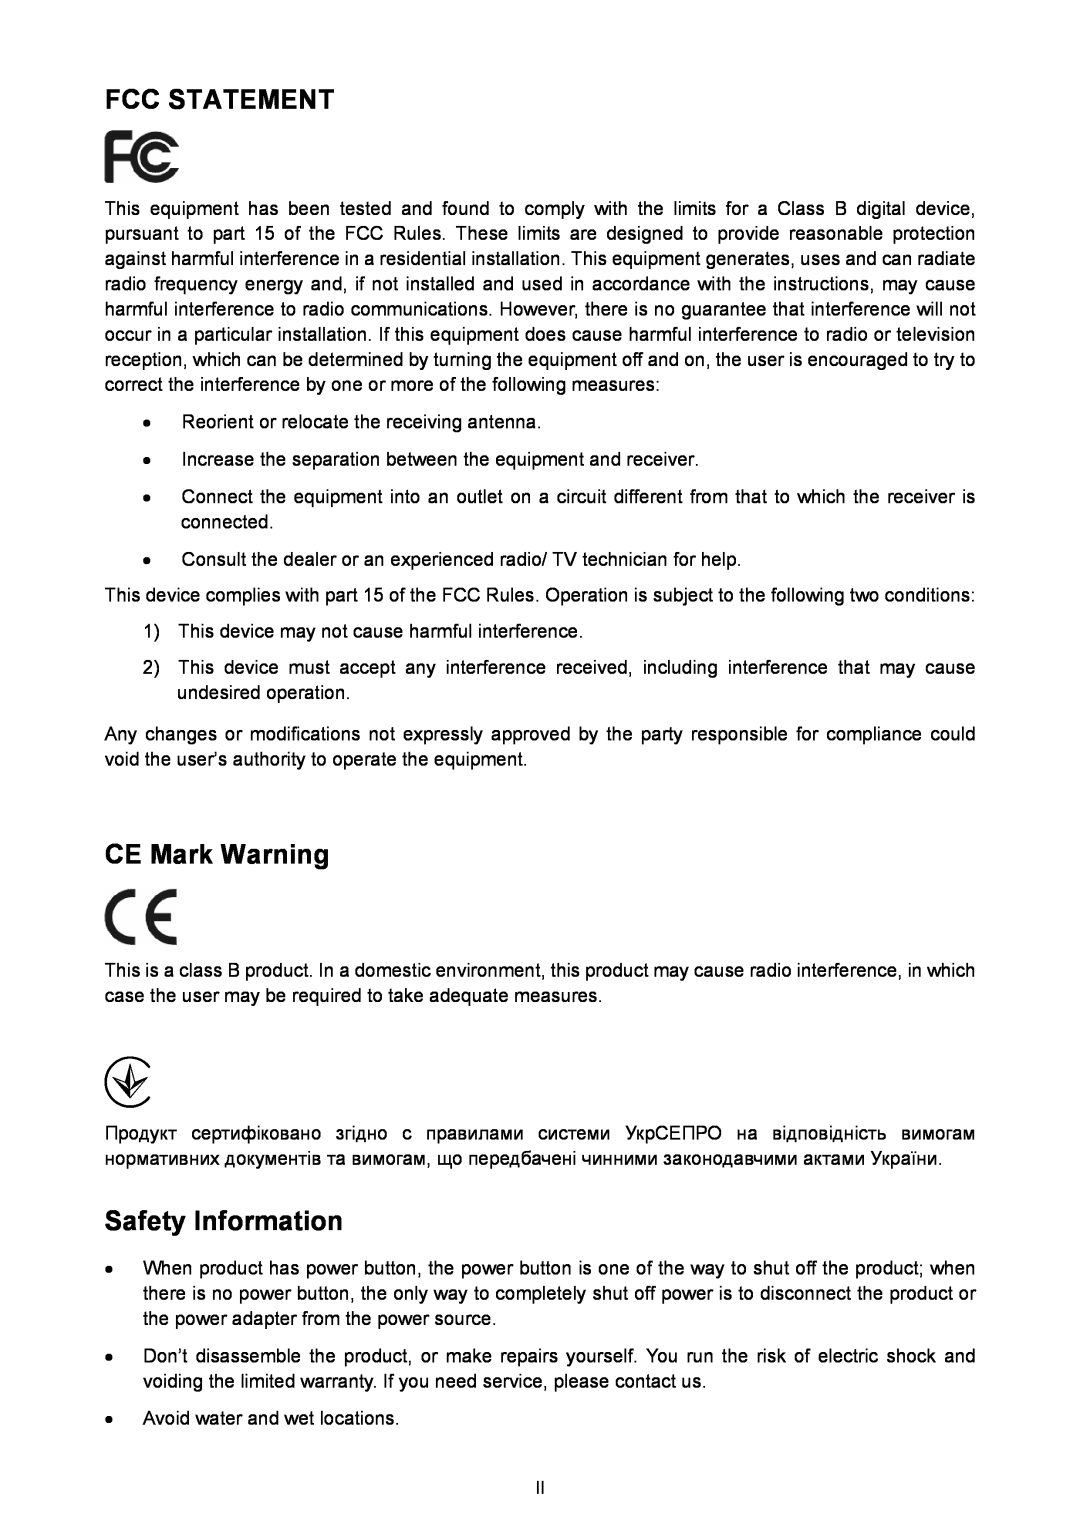 TP-Link TL-PA4010 manual Fcc Statement, CE Mark Warning, Safety Information 